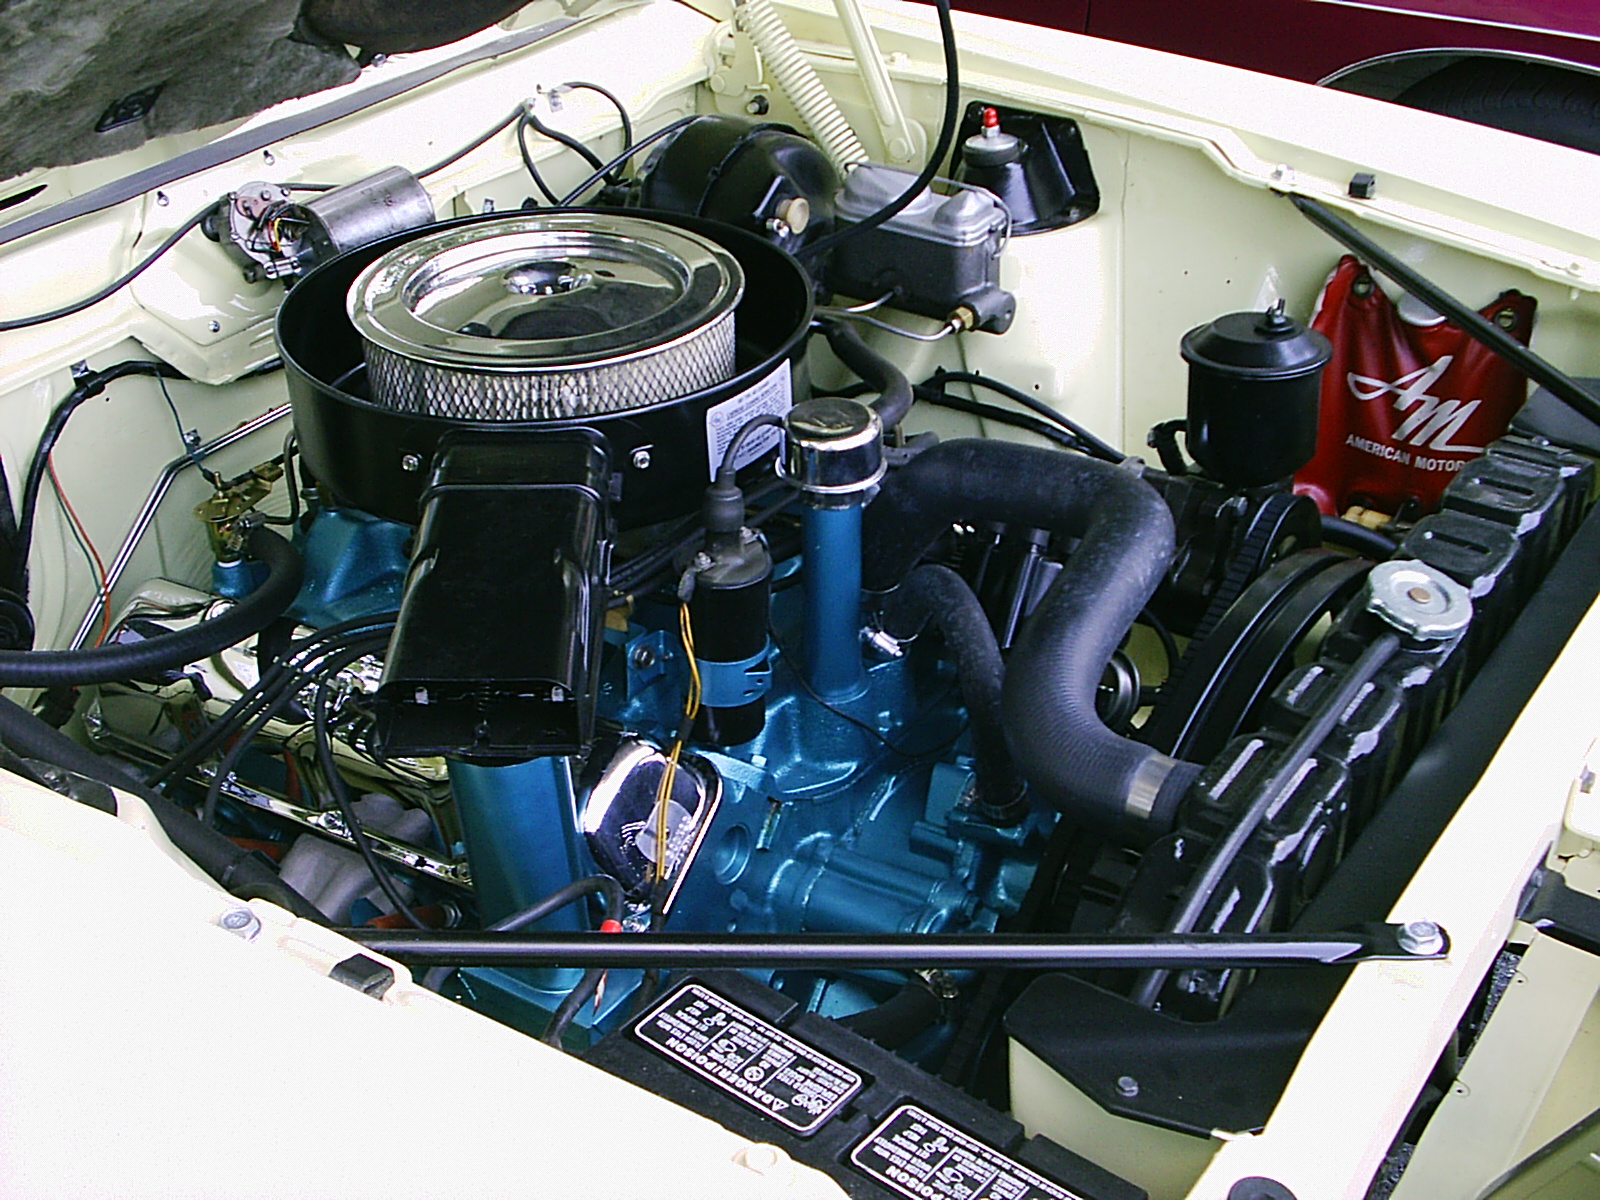 Chrysler 360 crate engine #1